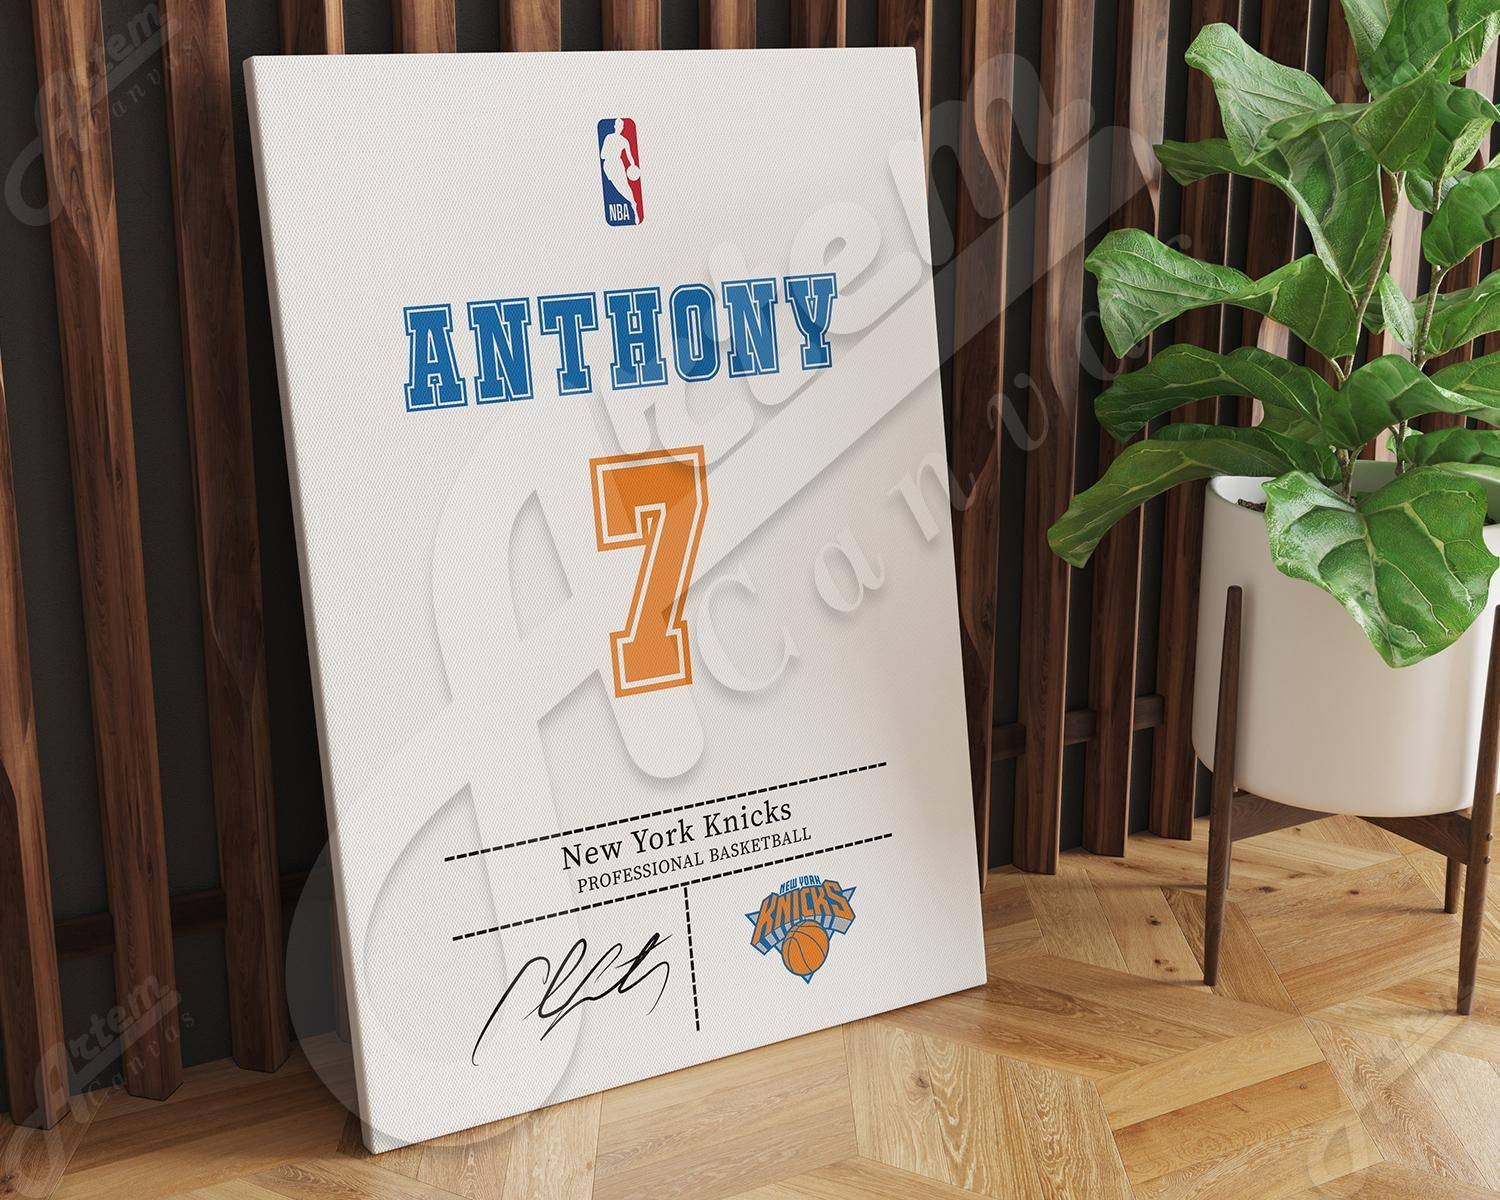 100% Authentic Adidas New York Knicks Carmelo Anthony Jersey Size XL